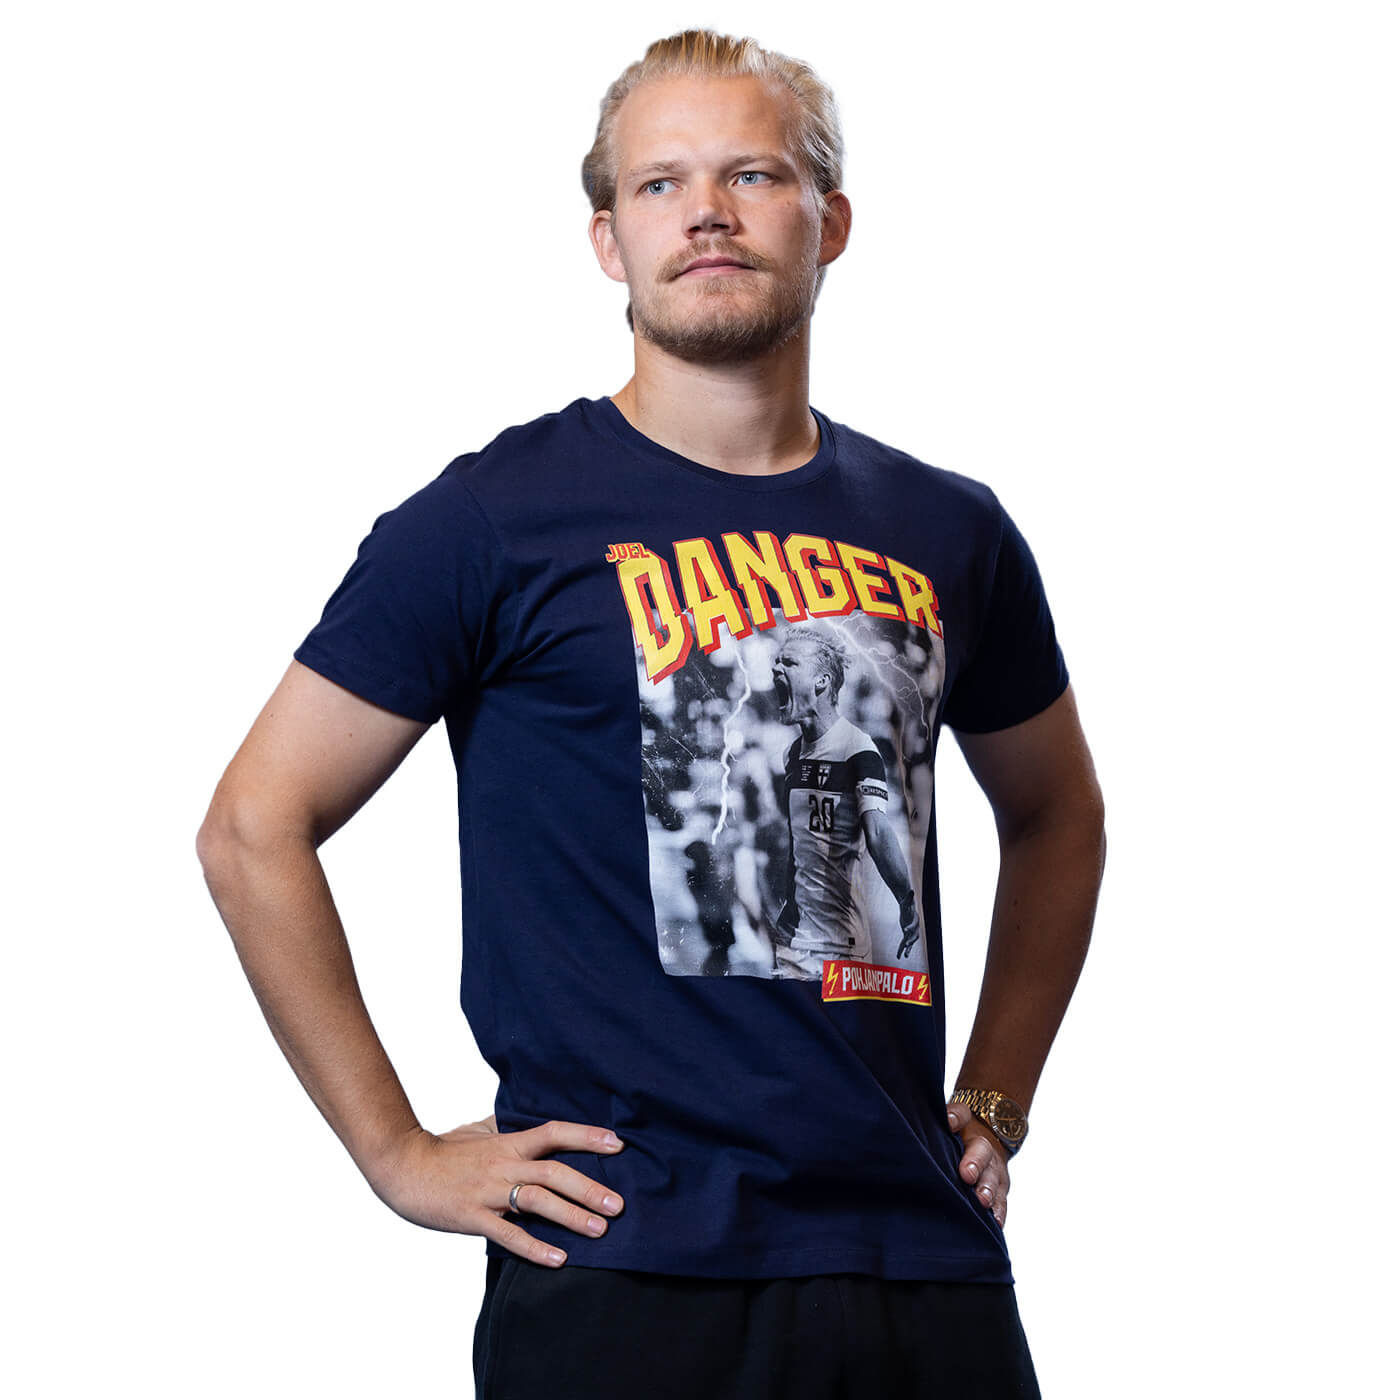 Danger Pohjanpalo T-shirt, Navy Blue